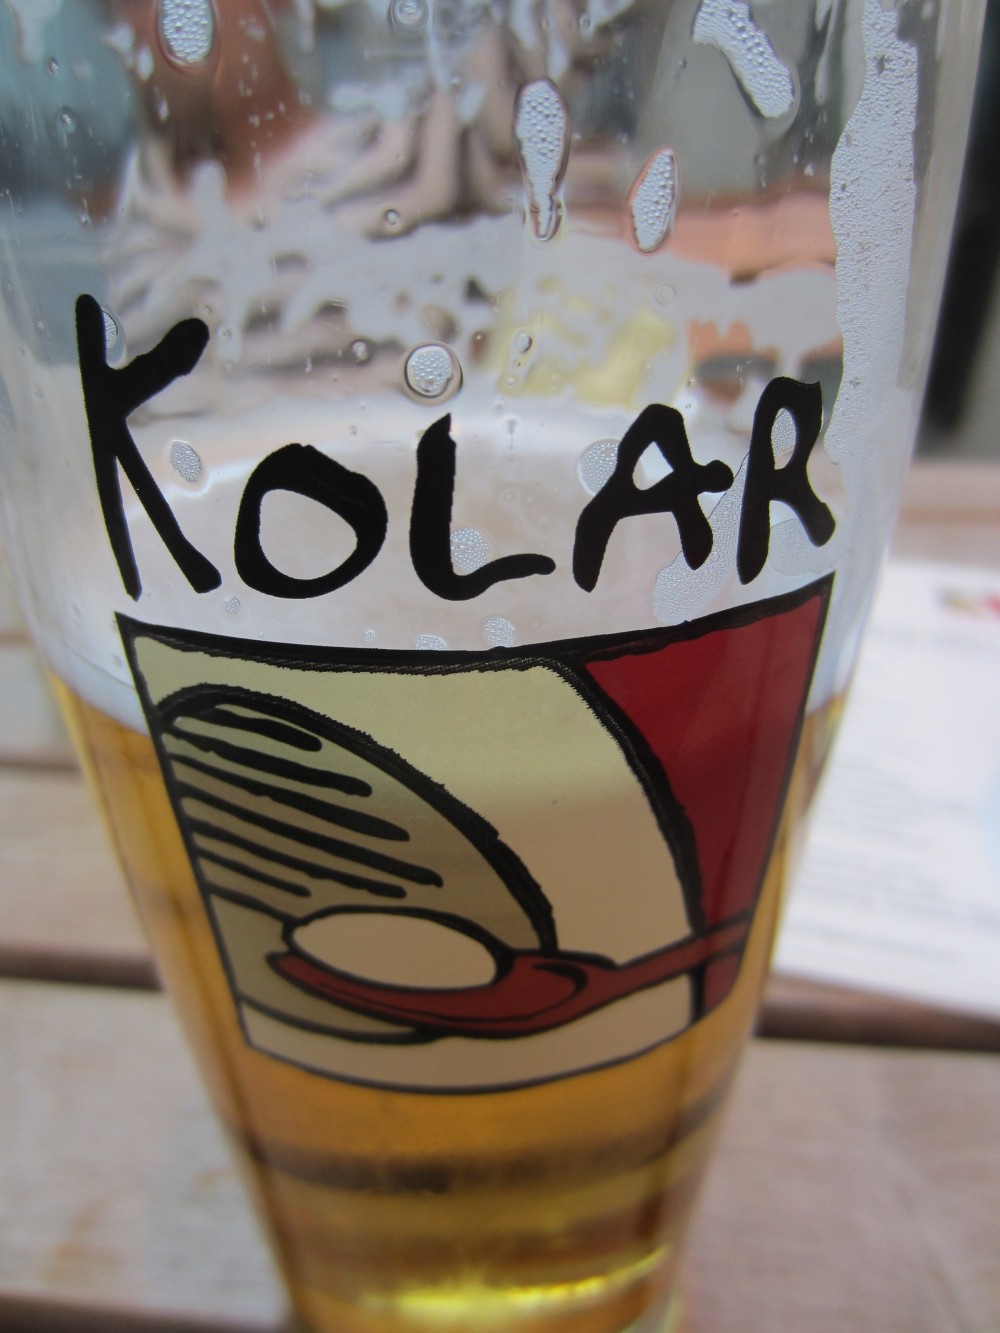 das Bier zischt - Kolar - Wien